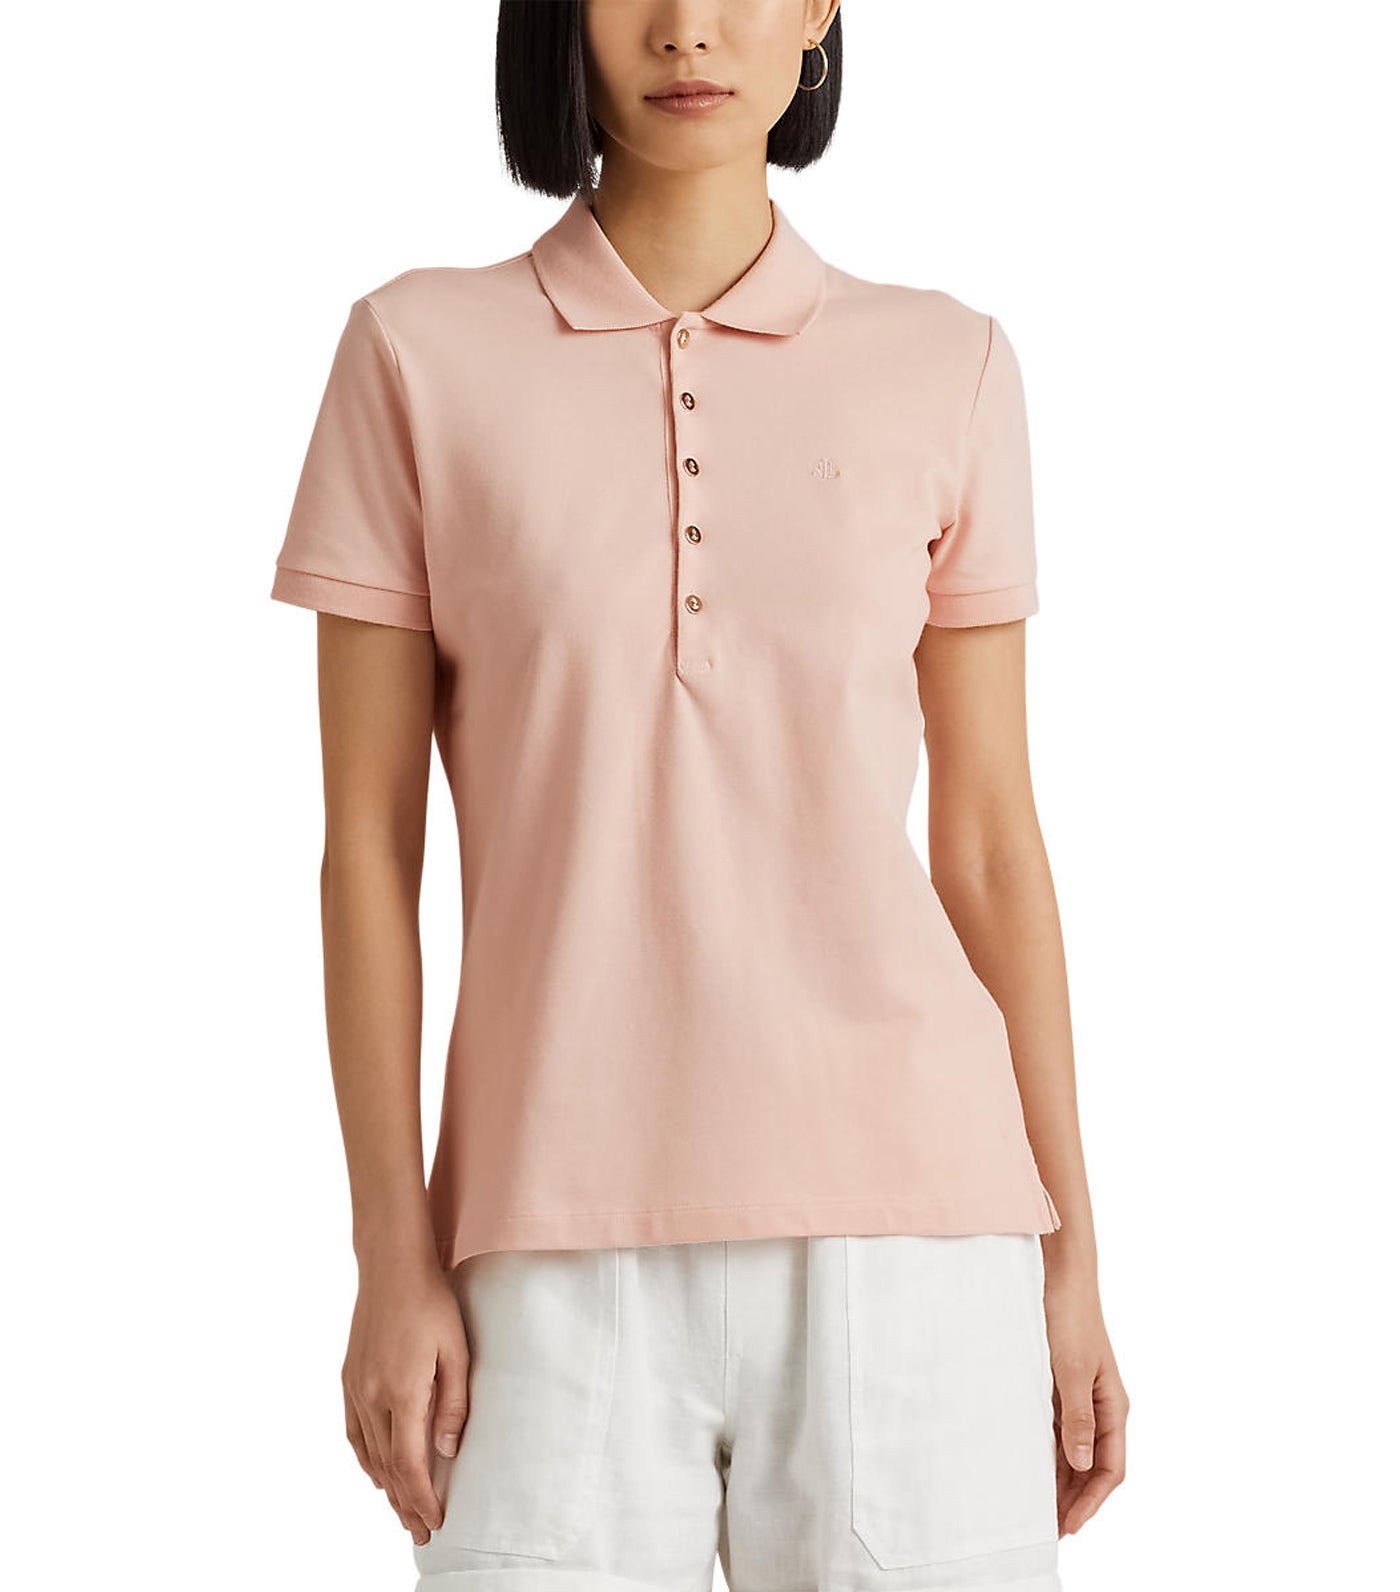 Women's Pique Polo Shirt Pale Pink